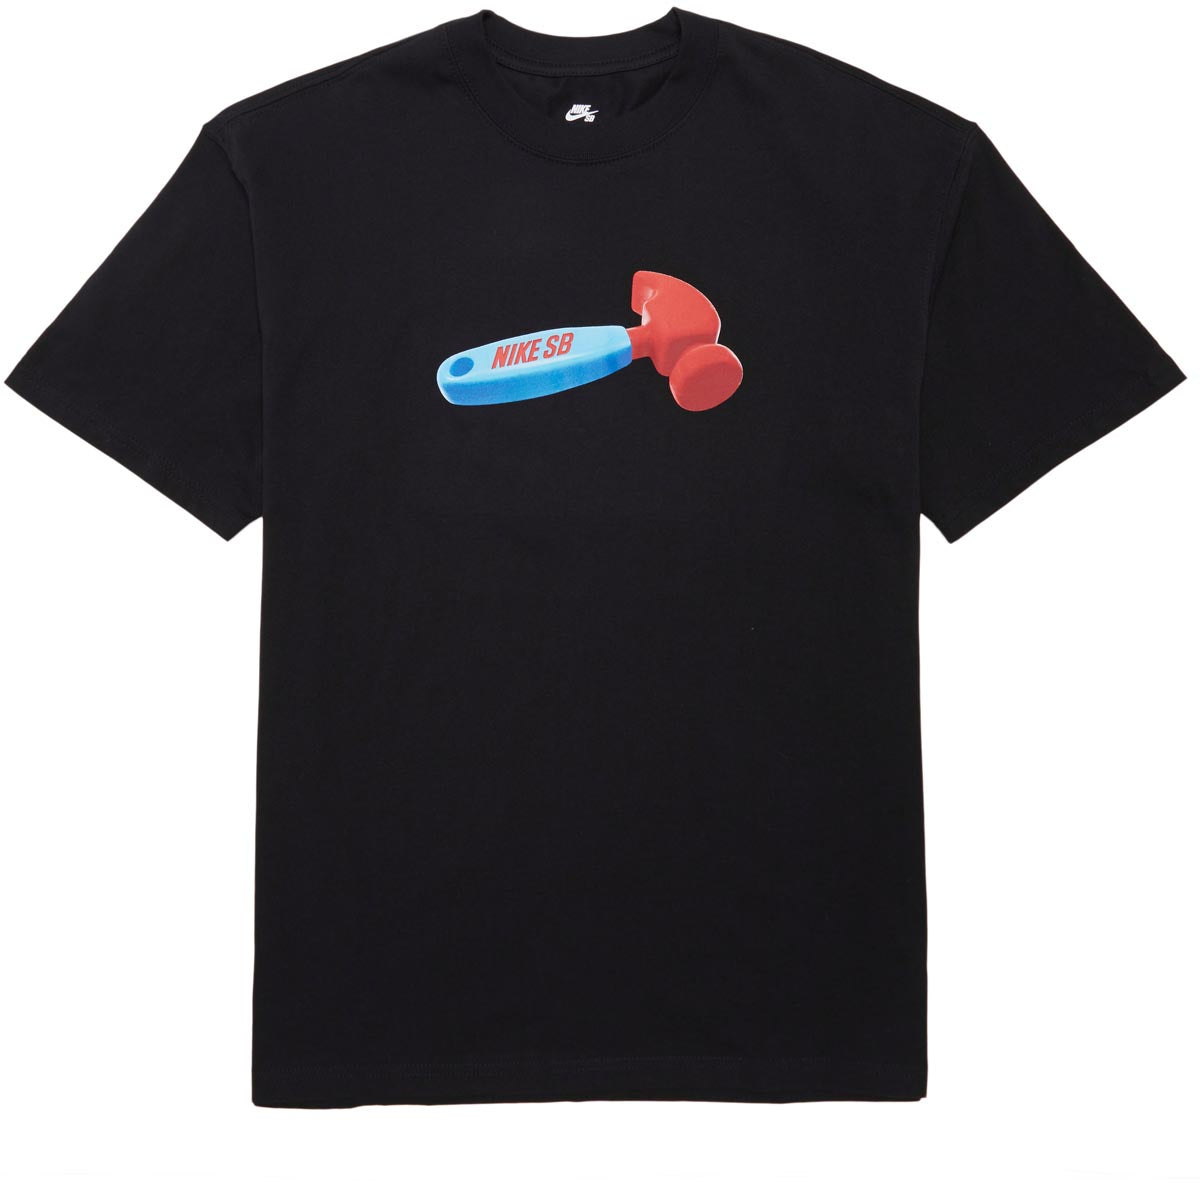 Nike SB Hammer T-Shirt - Black image 1